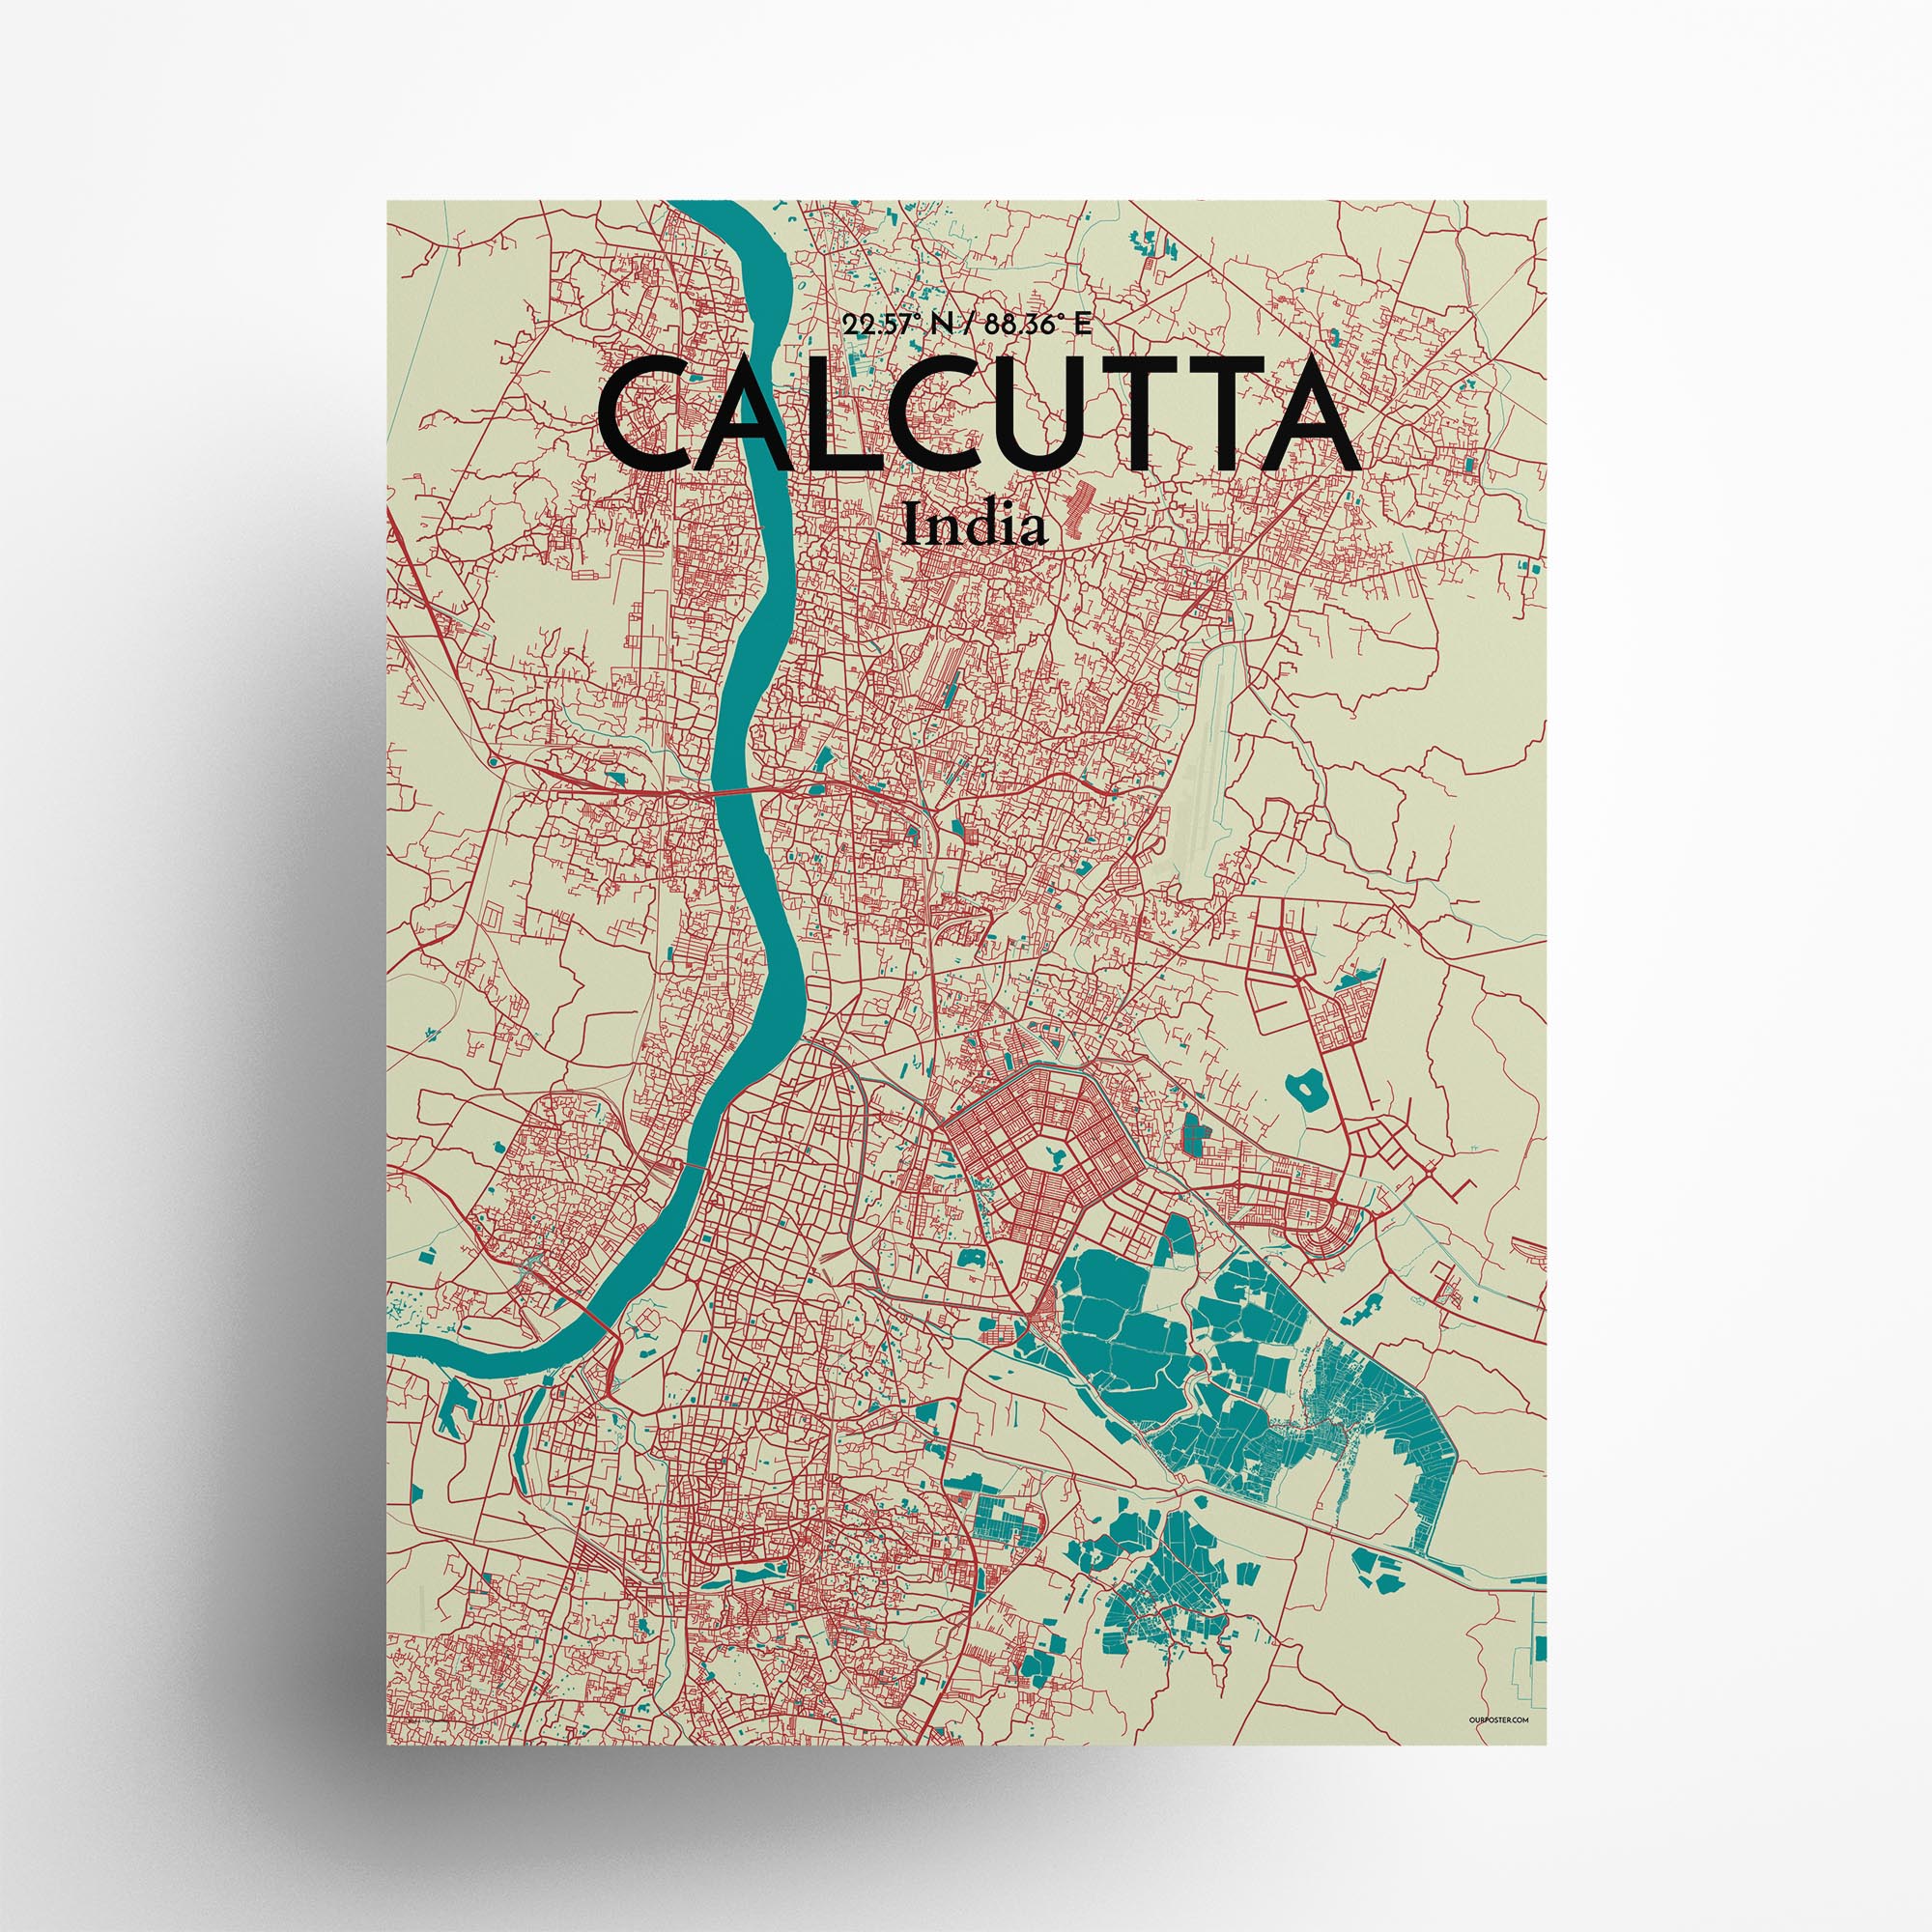 Calcutta city map poster in Tricolor of size 18" x 24"